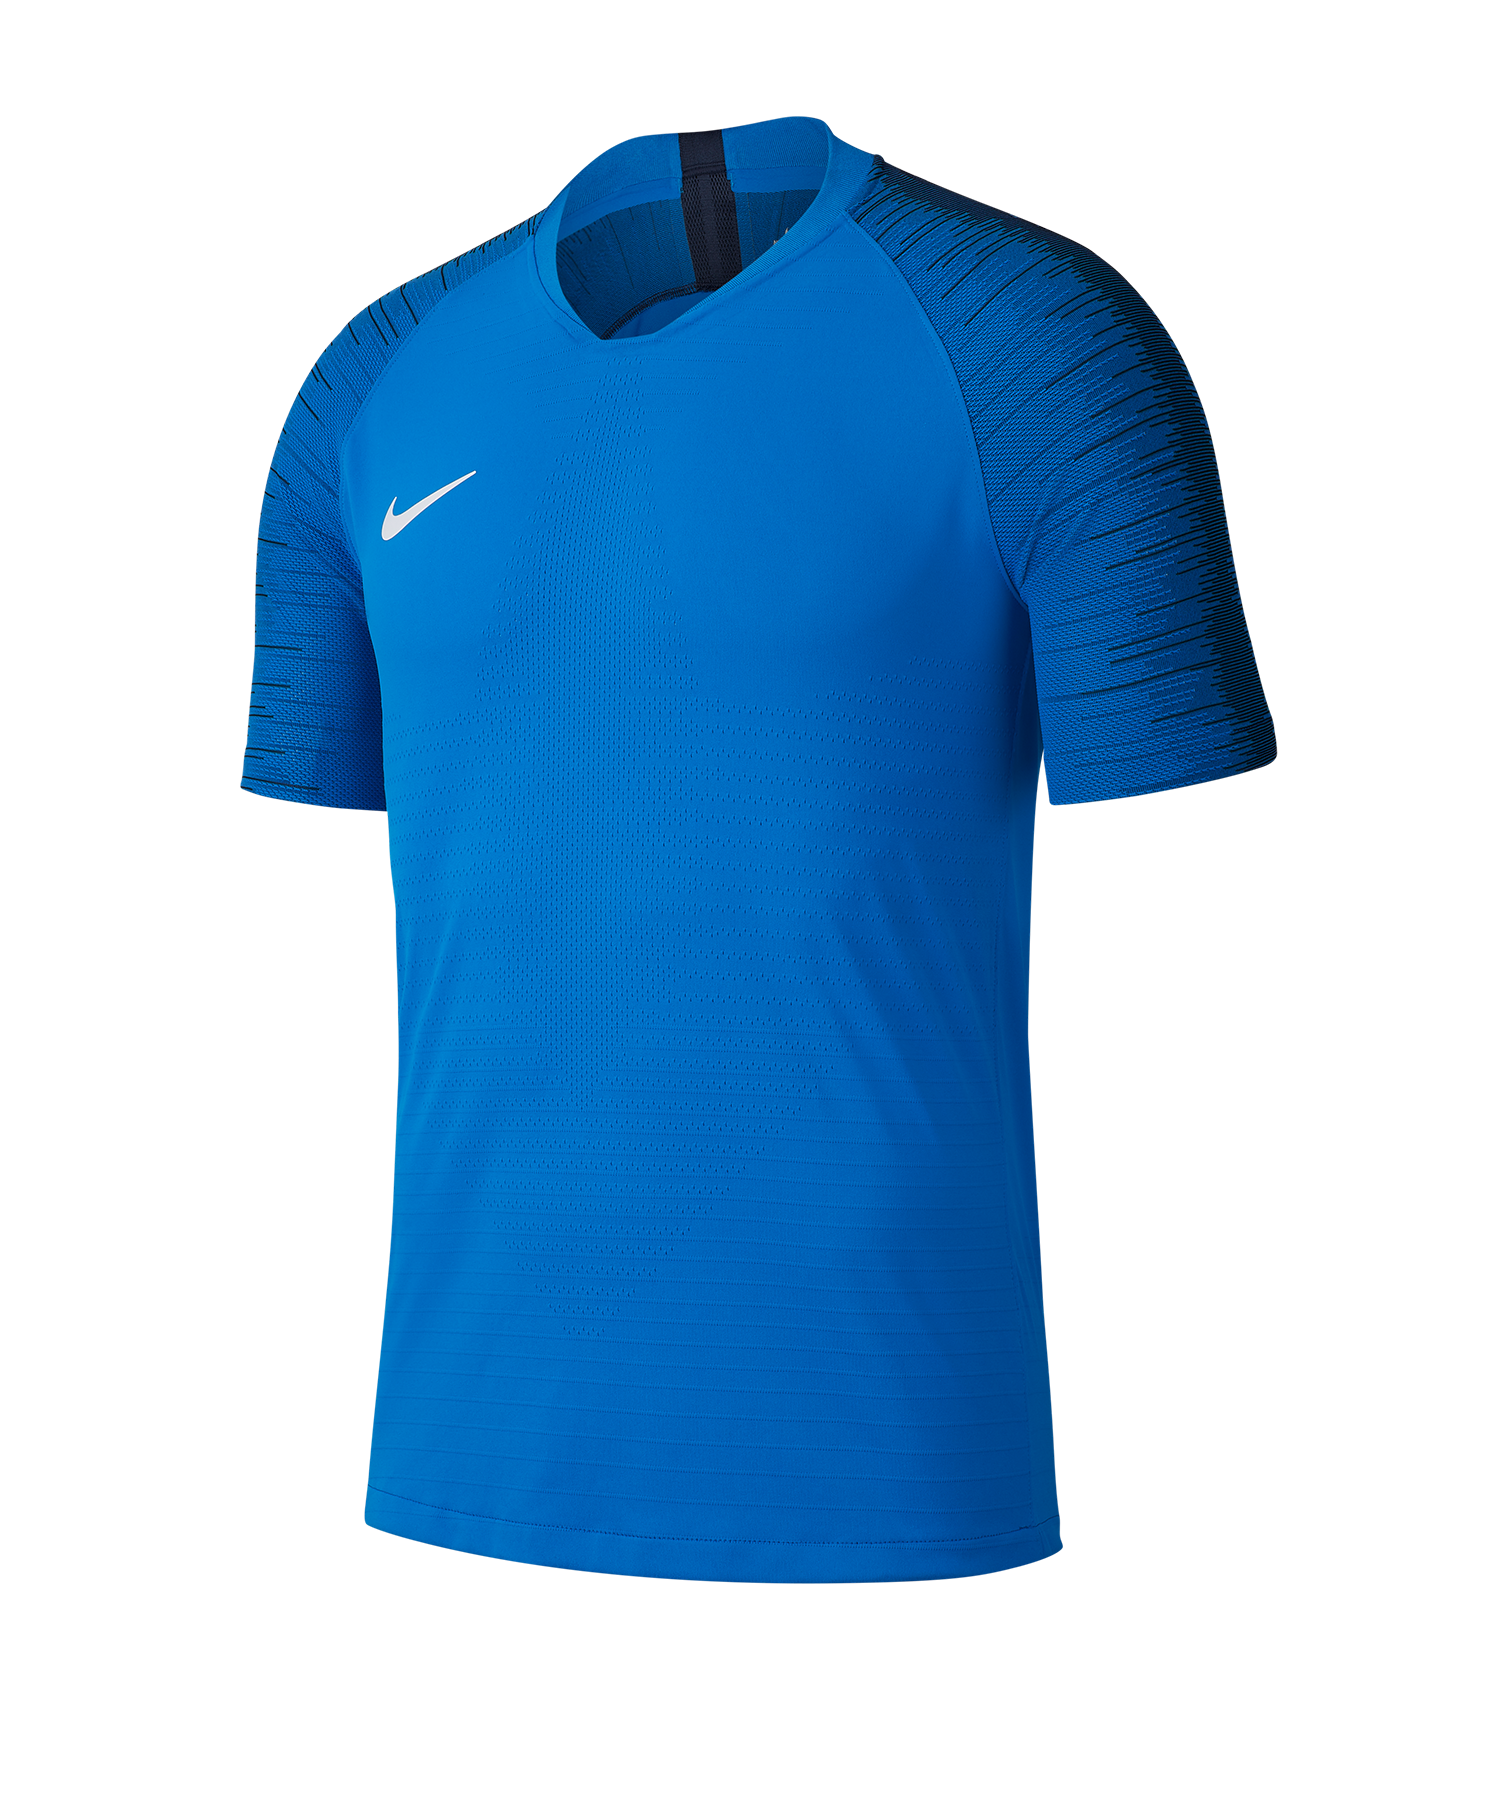 Beginner Retentie gloeilamp Nike Vaporknit II Shirt s/s - Blue